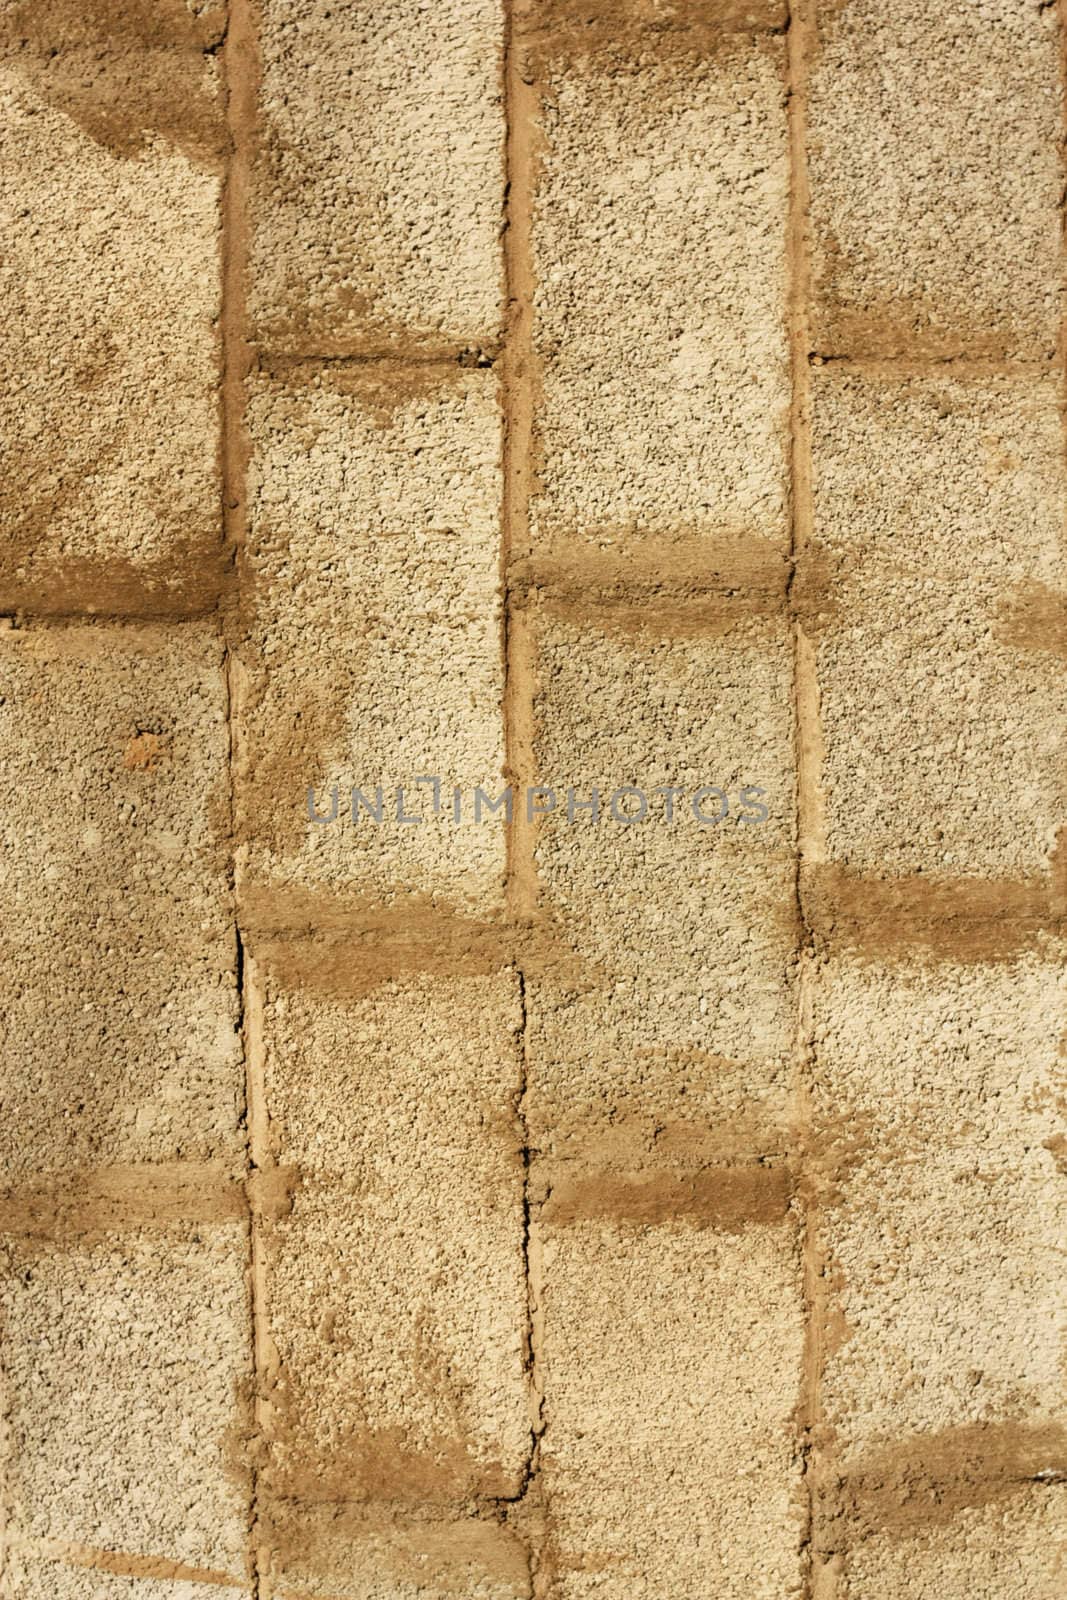 brick wall texture by schankz